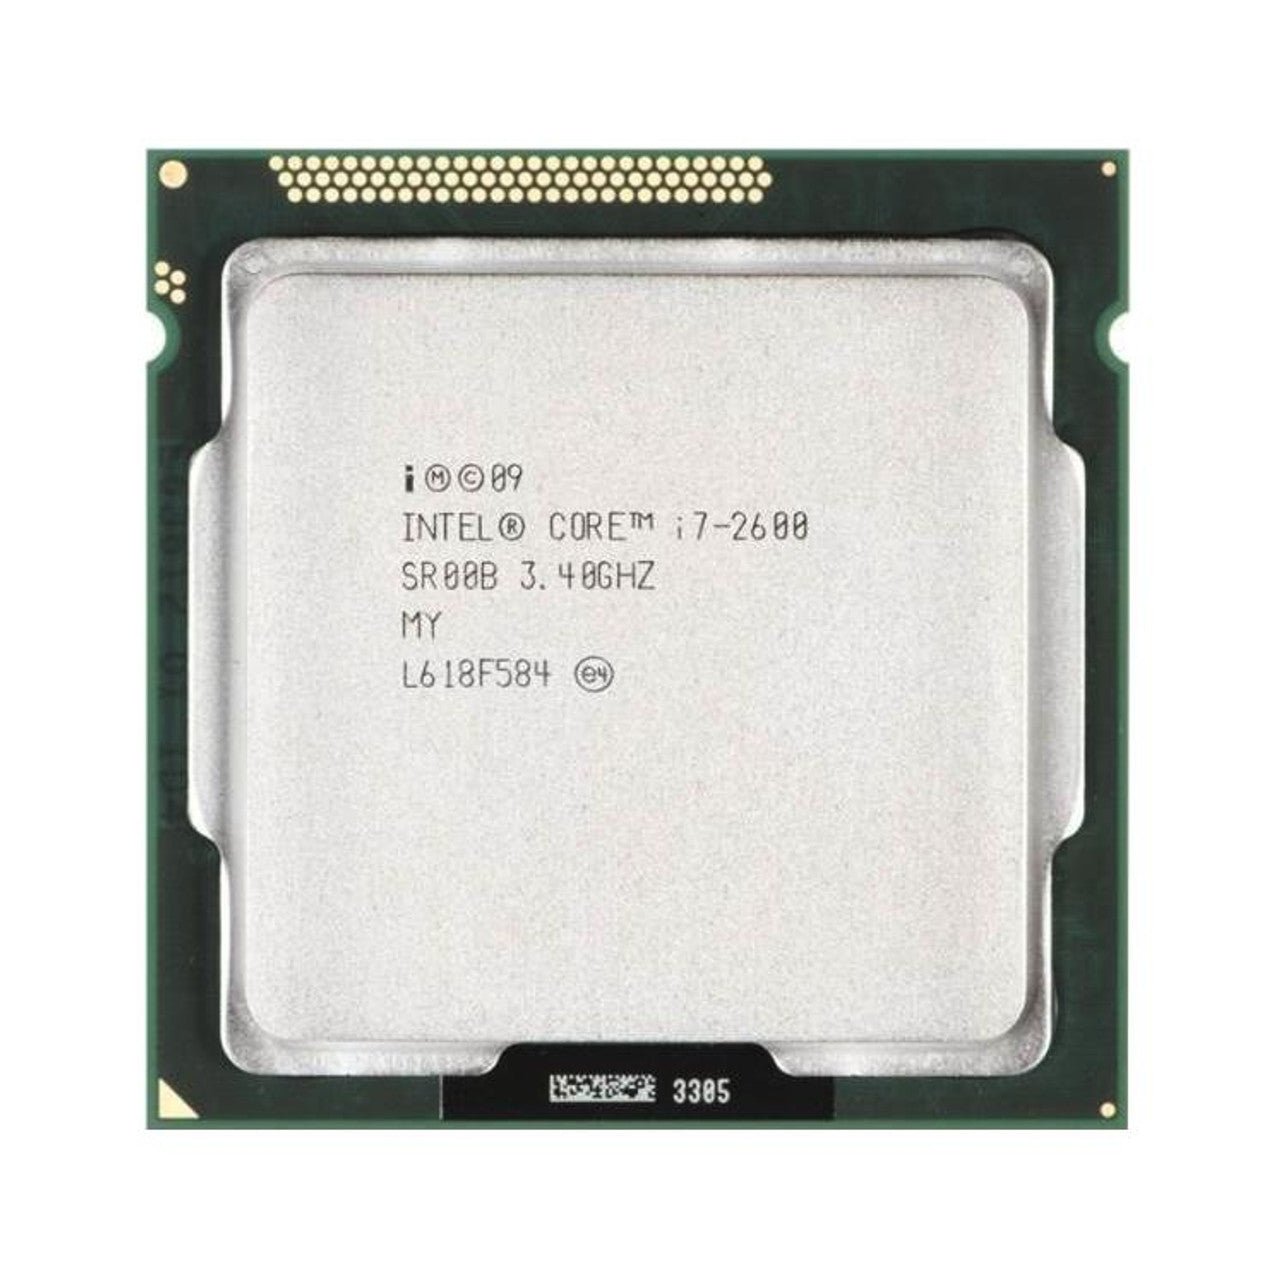 Intel i7-2600 3.8Ghz Quad-Core CPU - Geek Tech